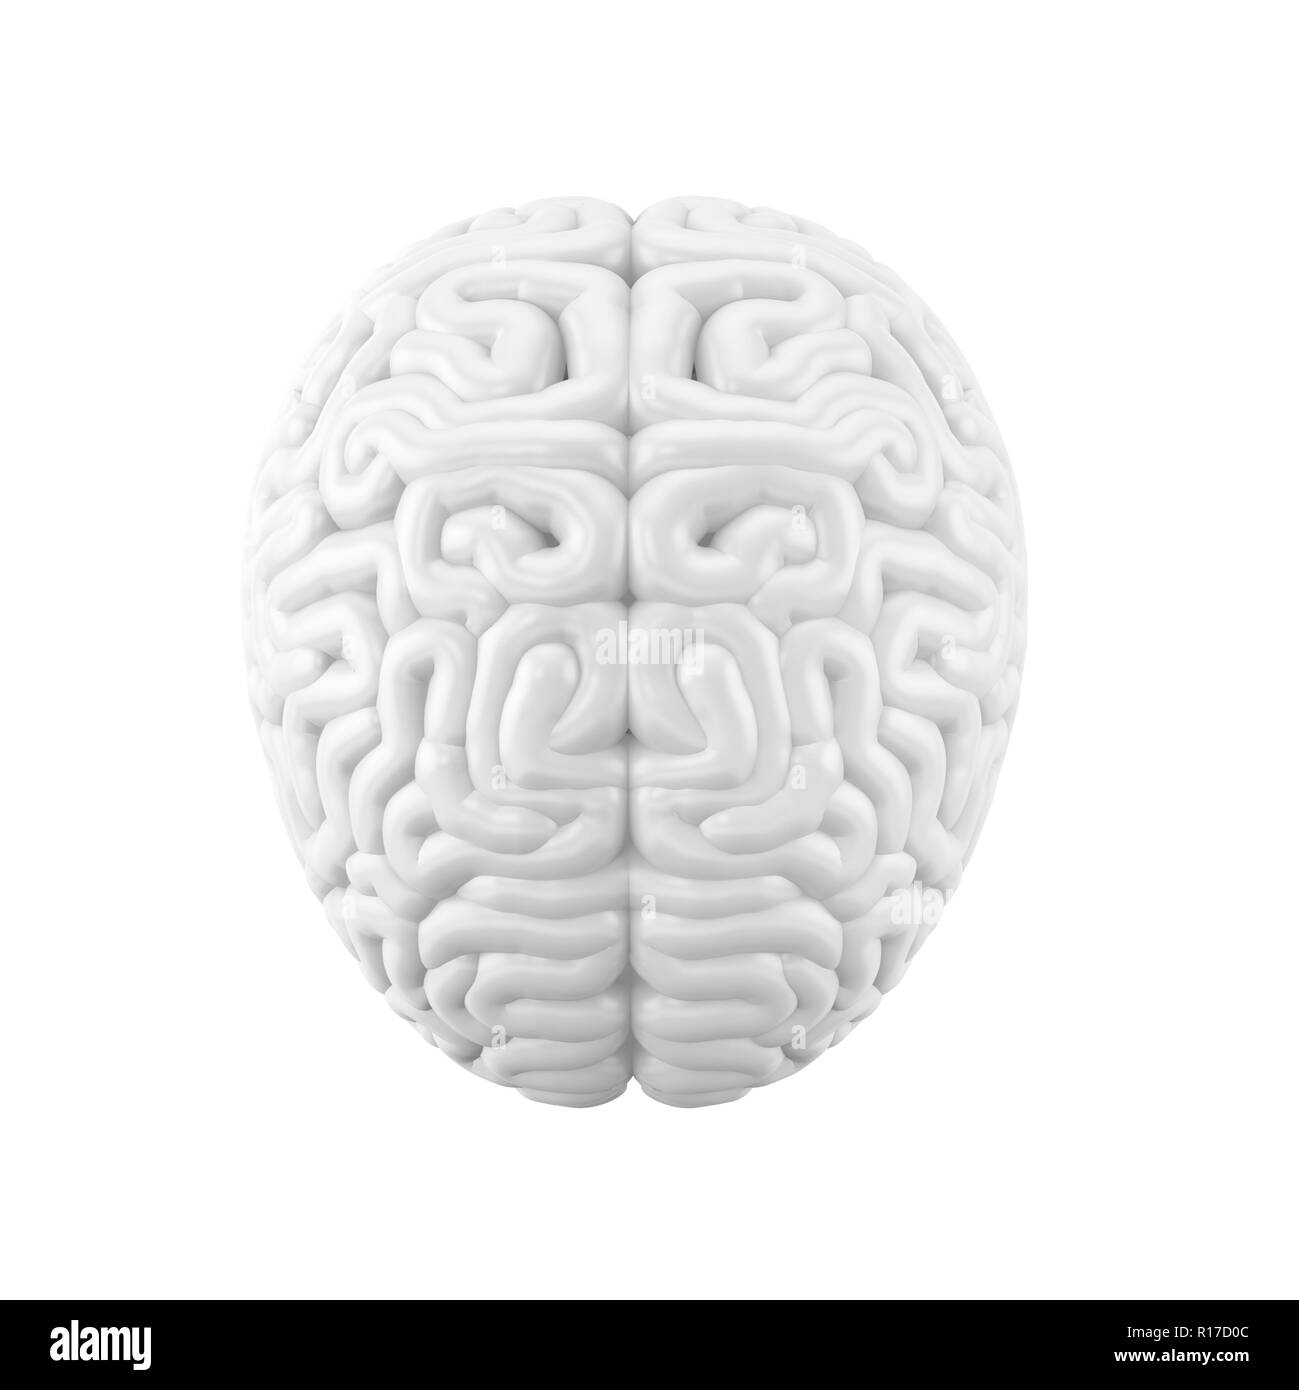 Human brain, white blank model, top view. 3D illustration. Stock Photo